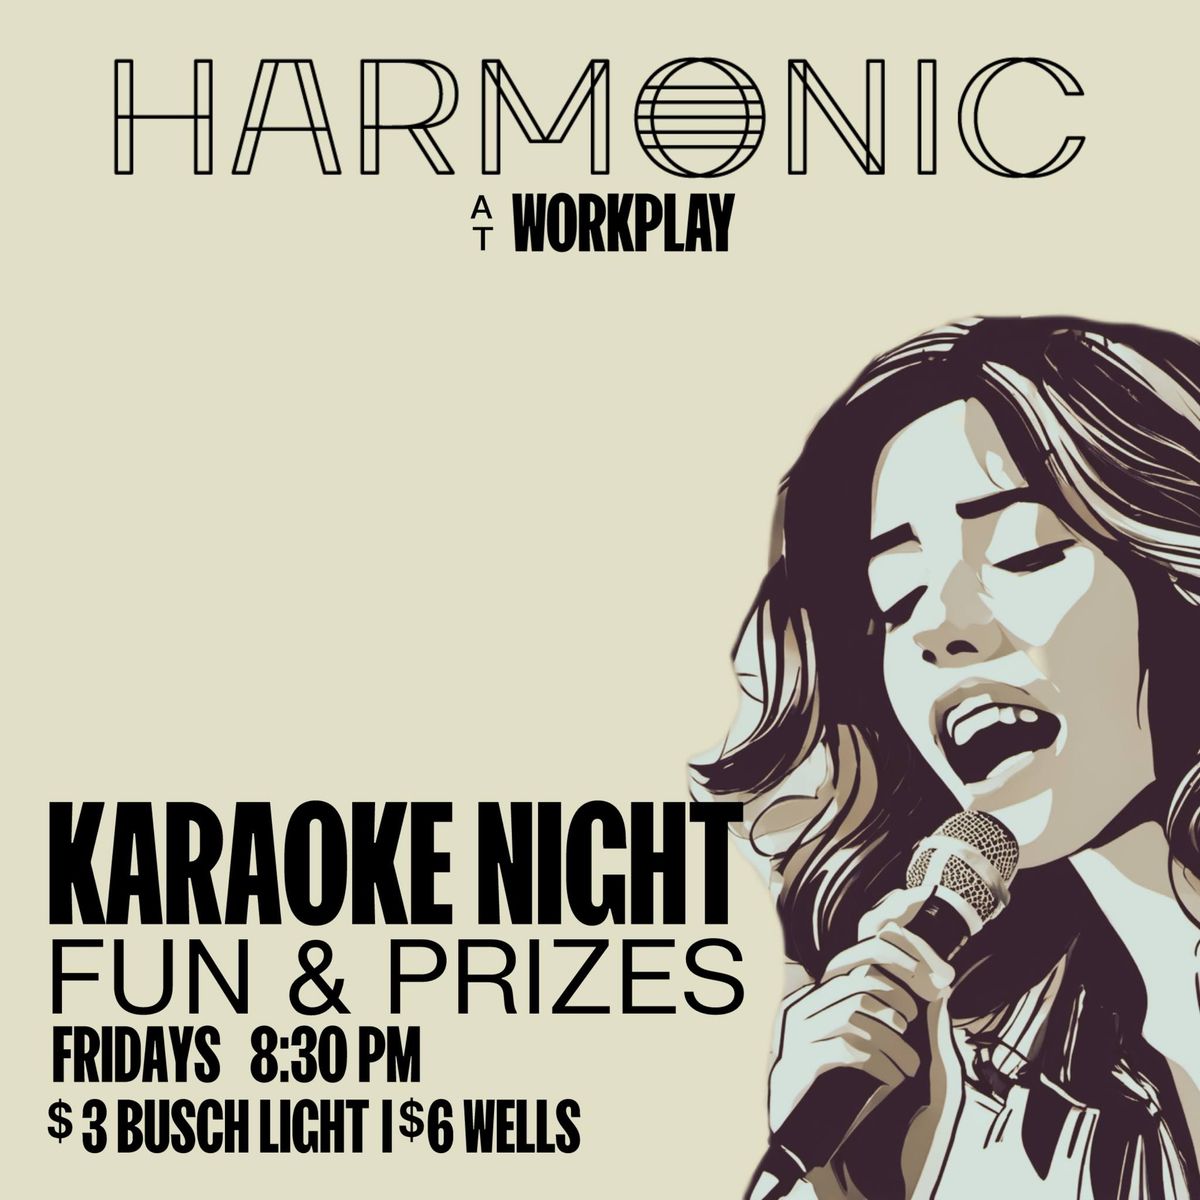 Karaoke Night at HARMONIC at WORKPLAY 